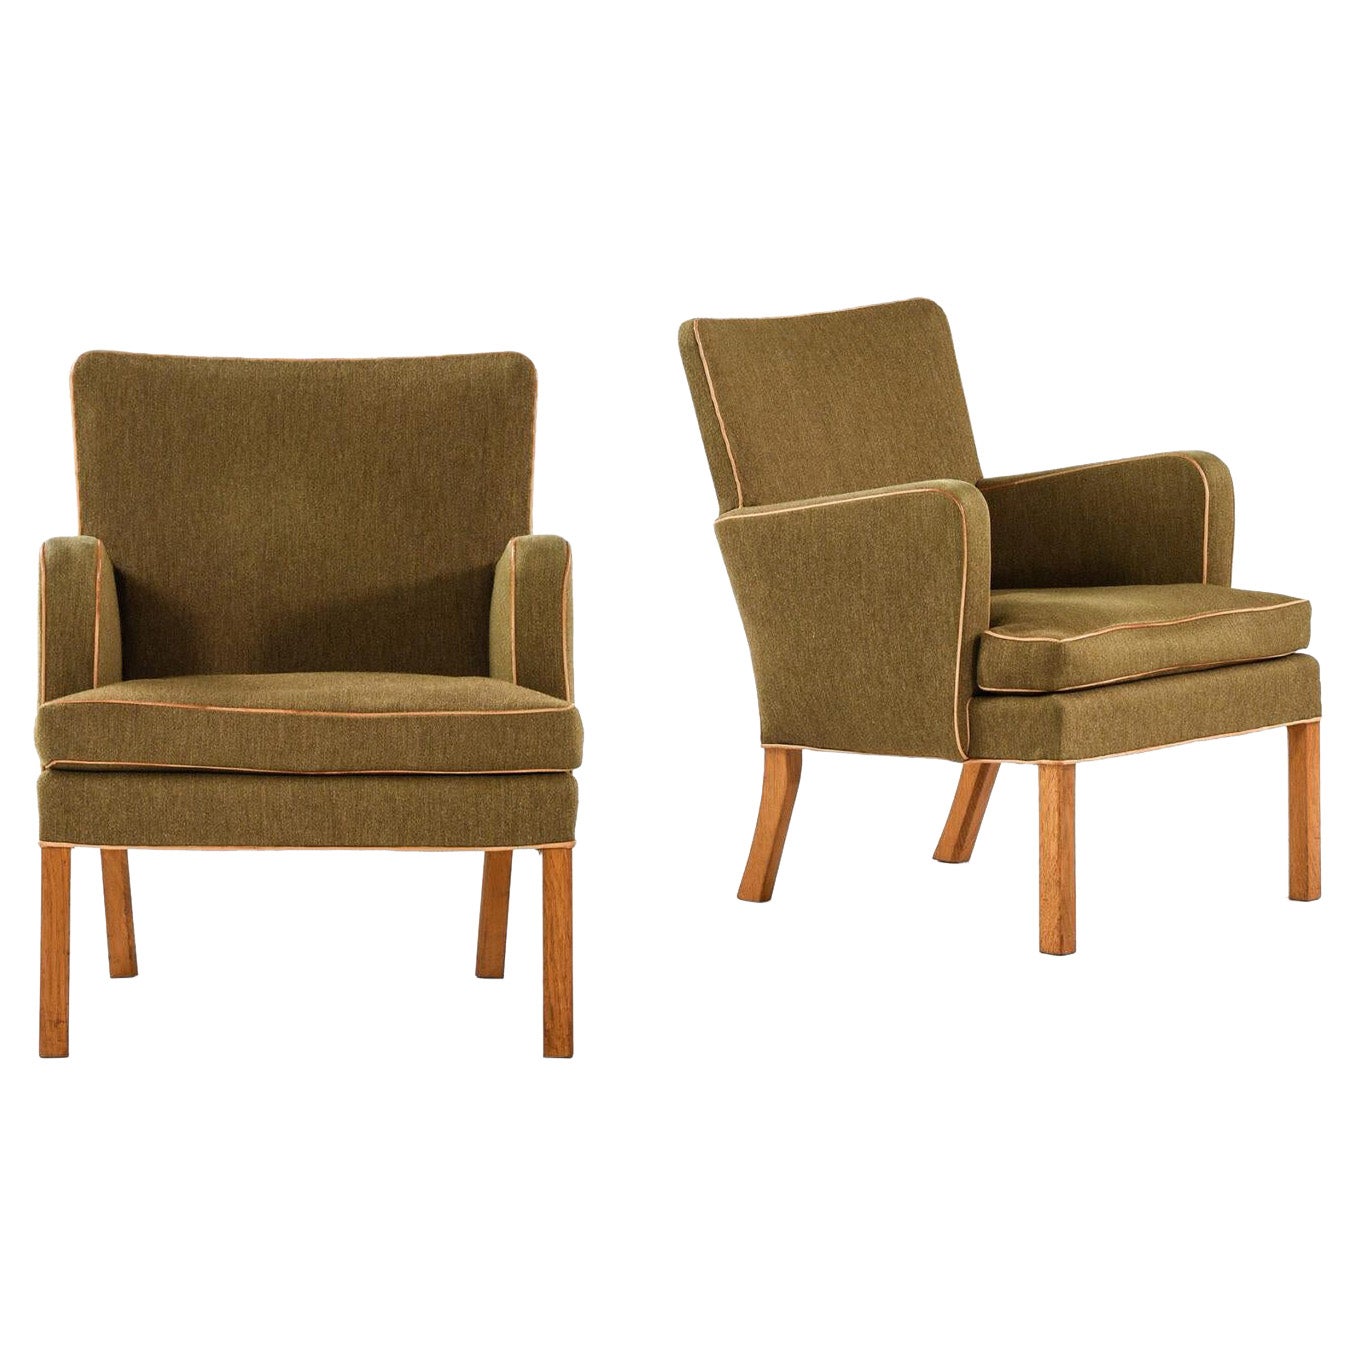 Kaare Klint Easy Chairs Model 5313 Produced by Cabinetmaker Rud Rasmussen